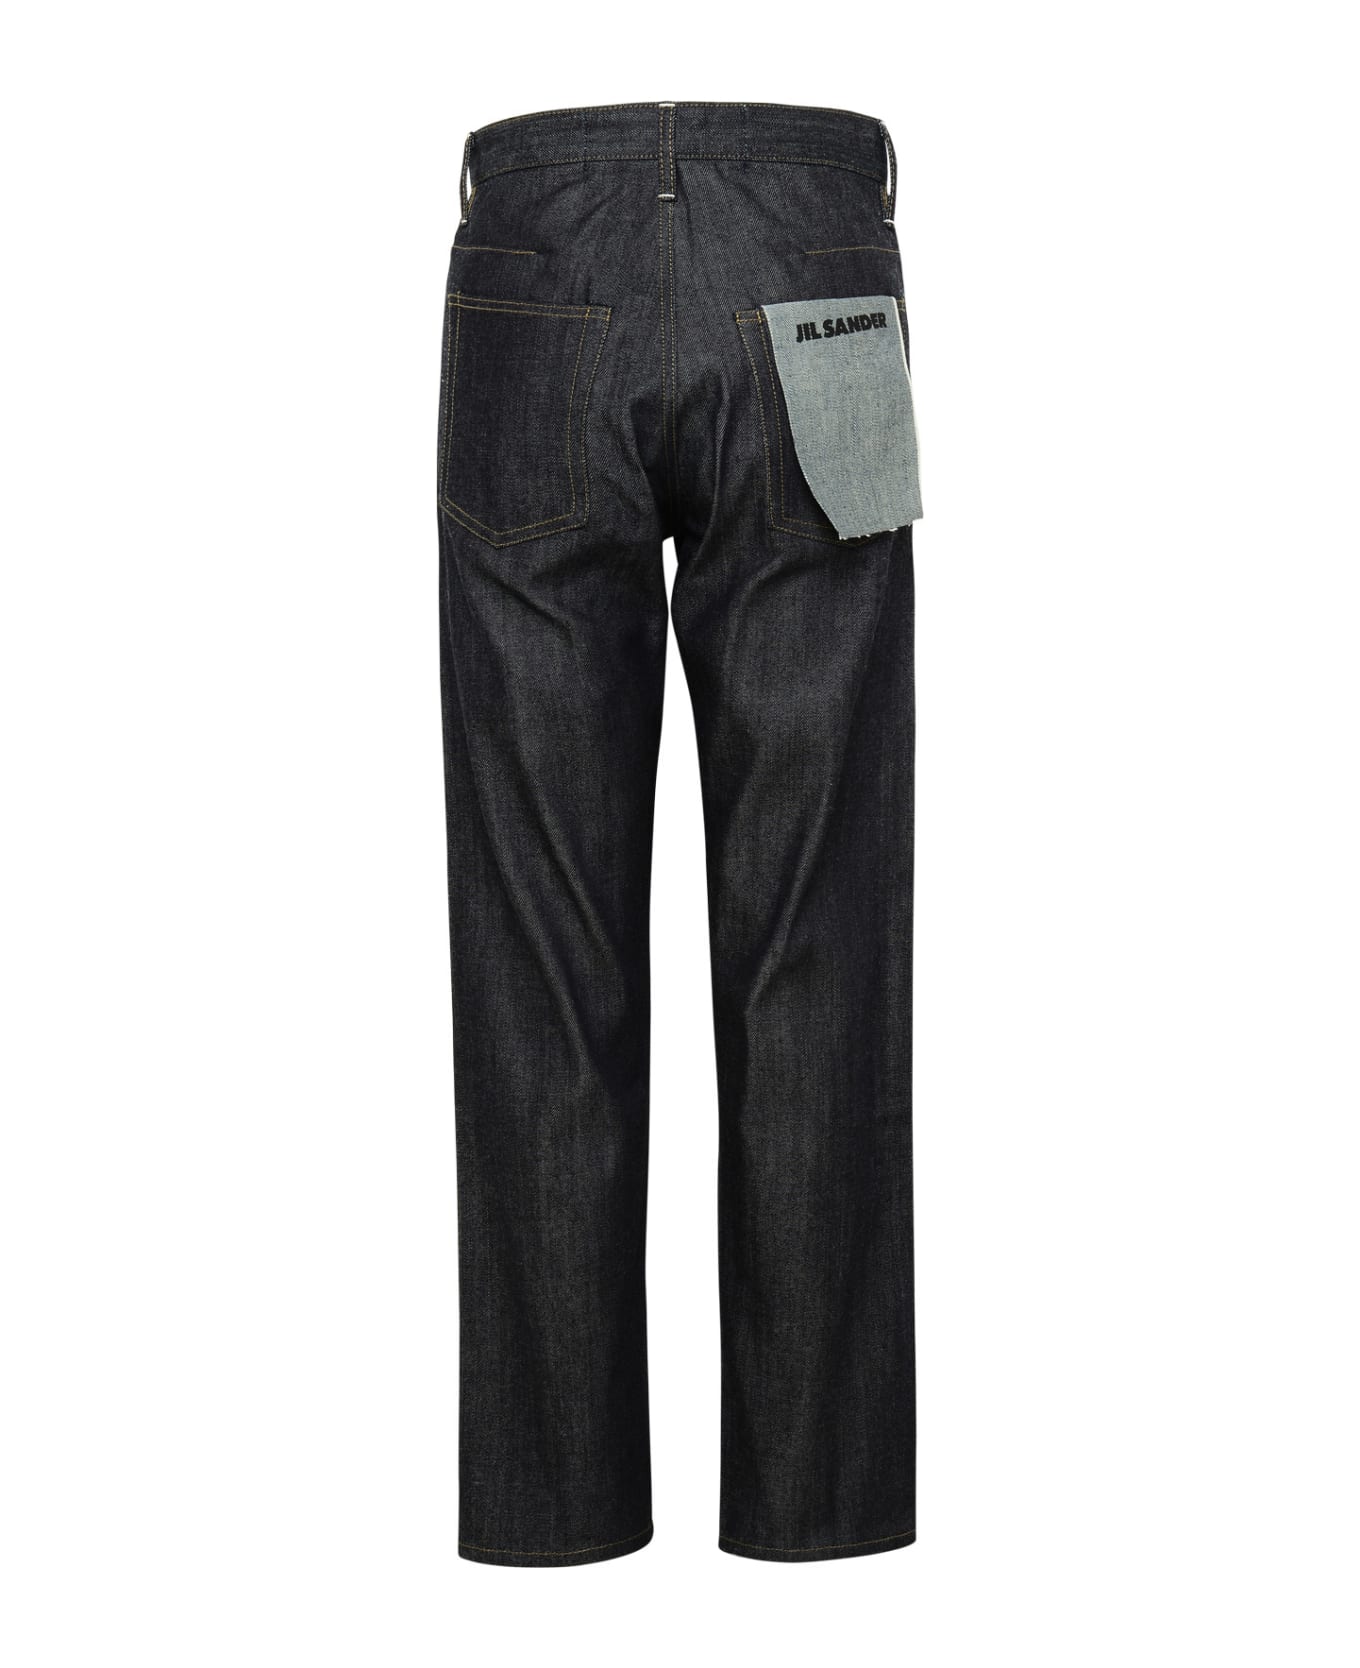 Jil Sander Black Cotton Jeans - Black